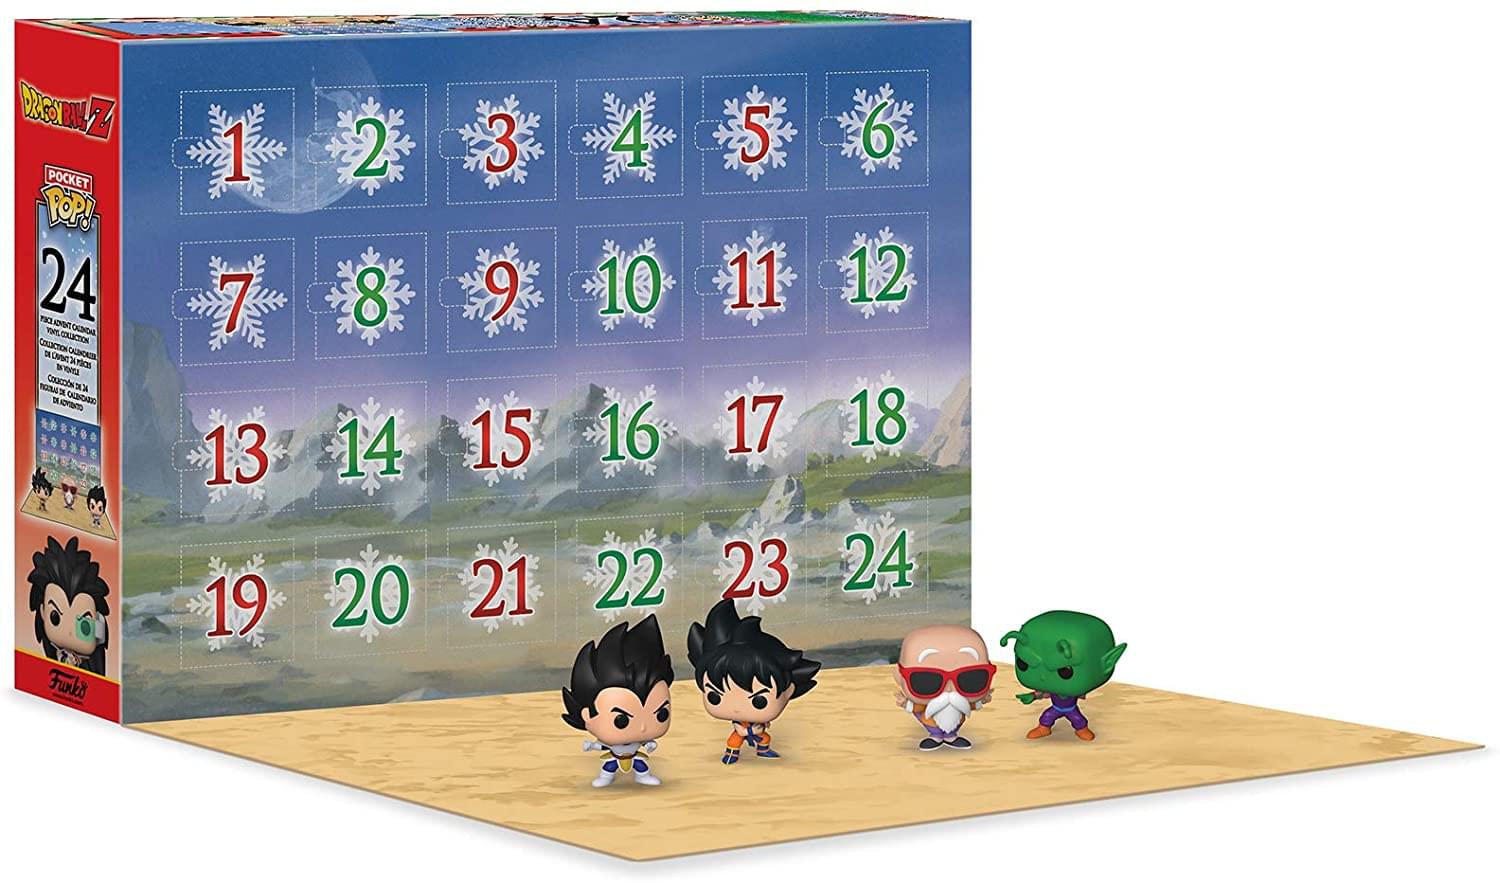 The Pokemon Funko Pop! Advent Calendar Is Adorable Nostalgic Fun